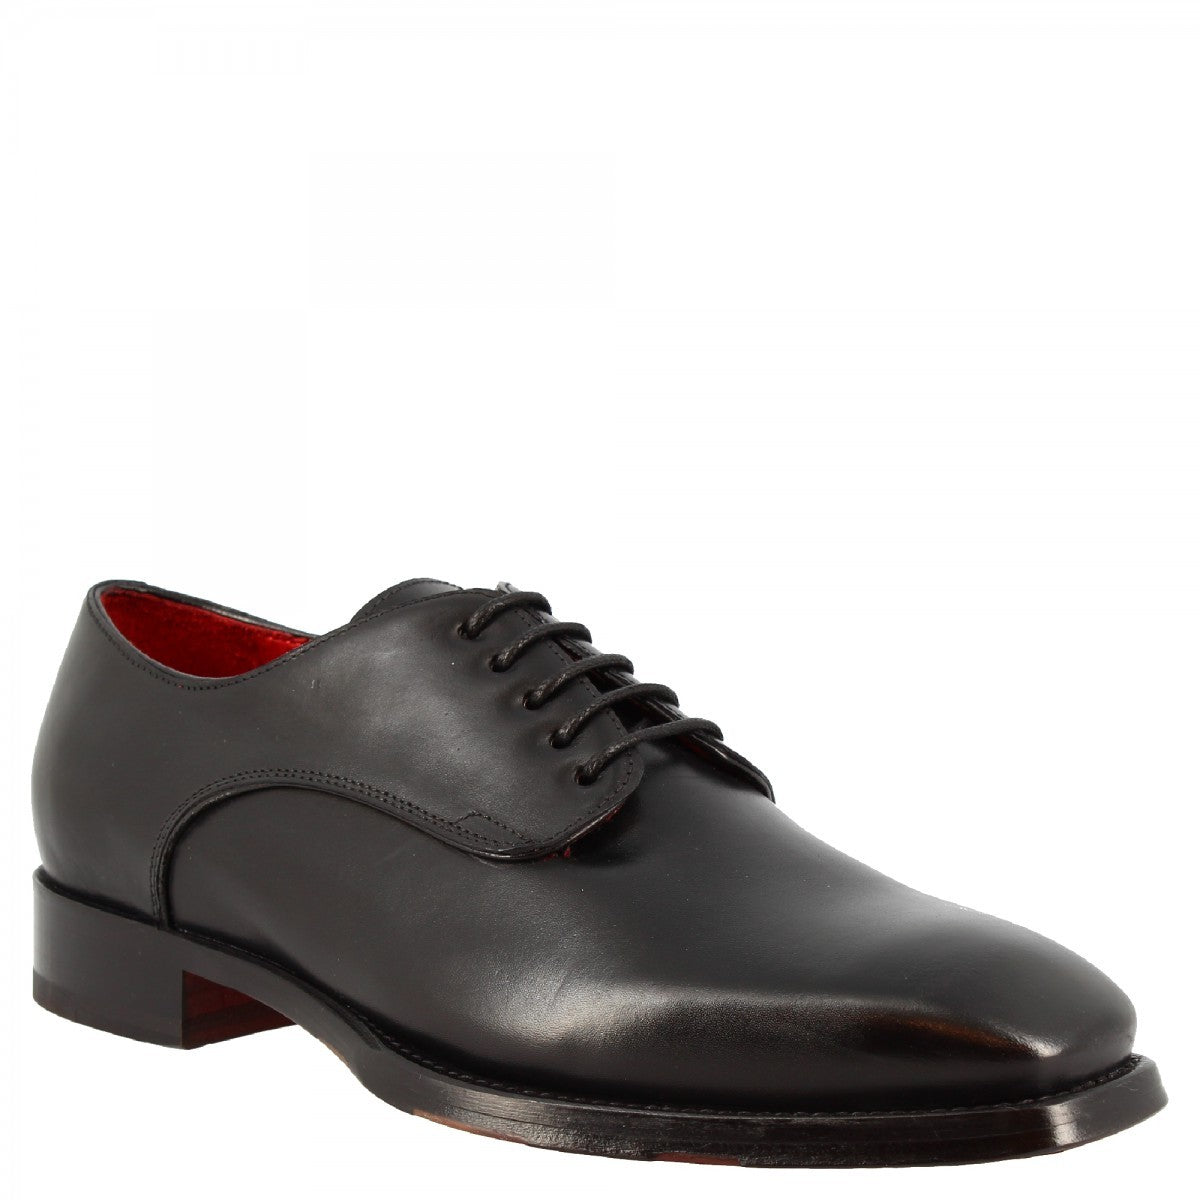 Elegant handmade men's brogues shoes in black leather